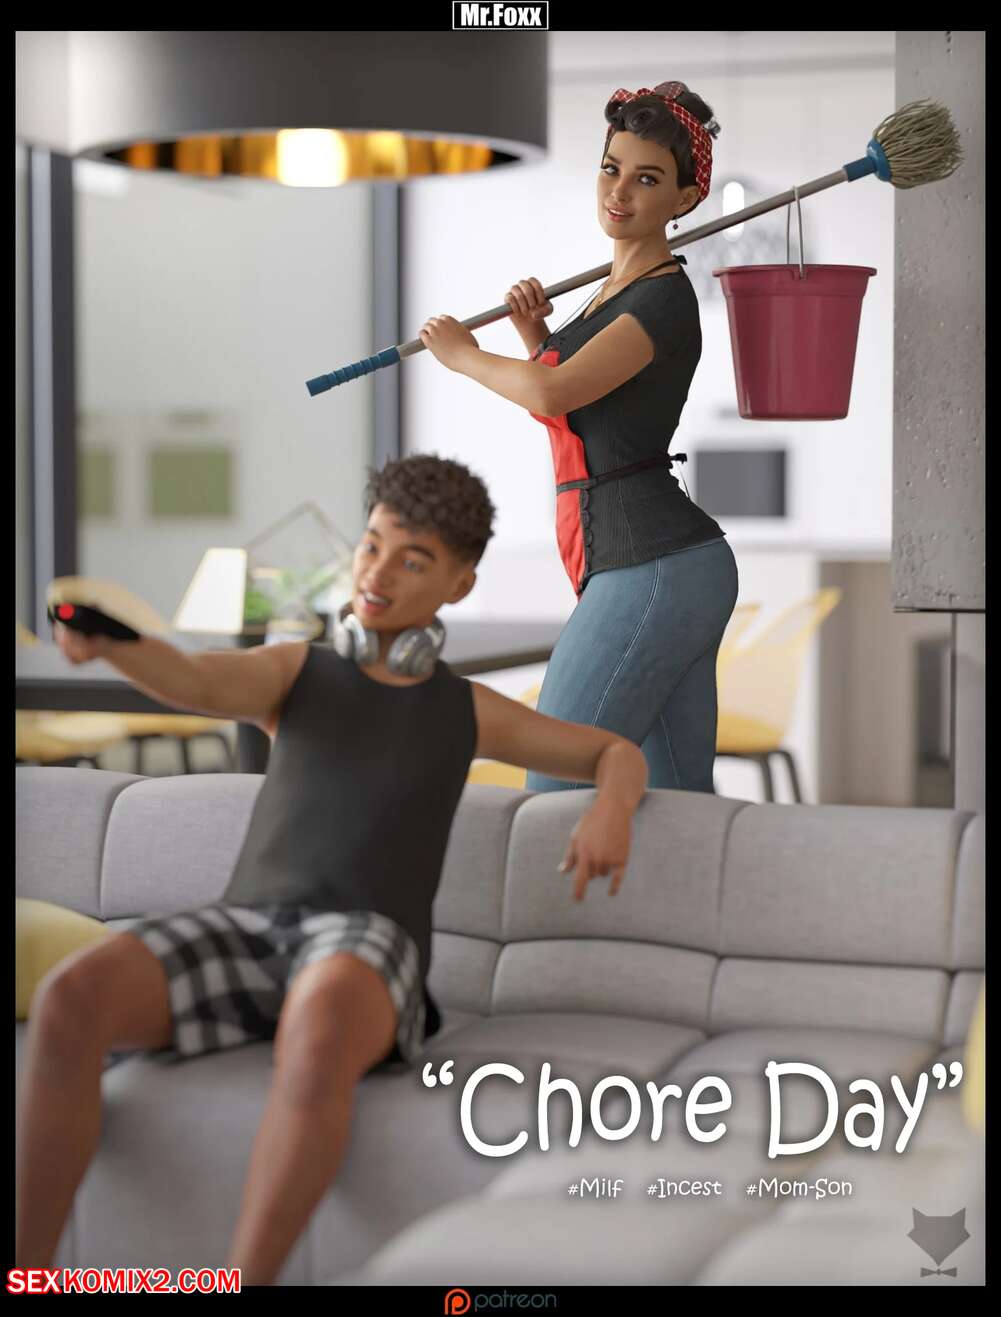 Chore day- mr.foxx